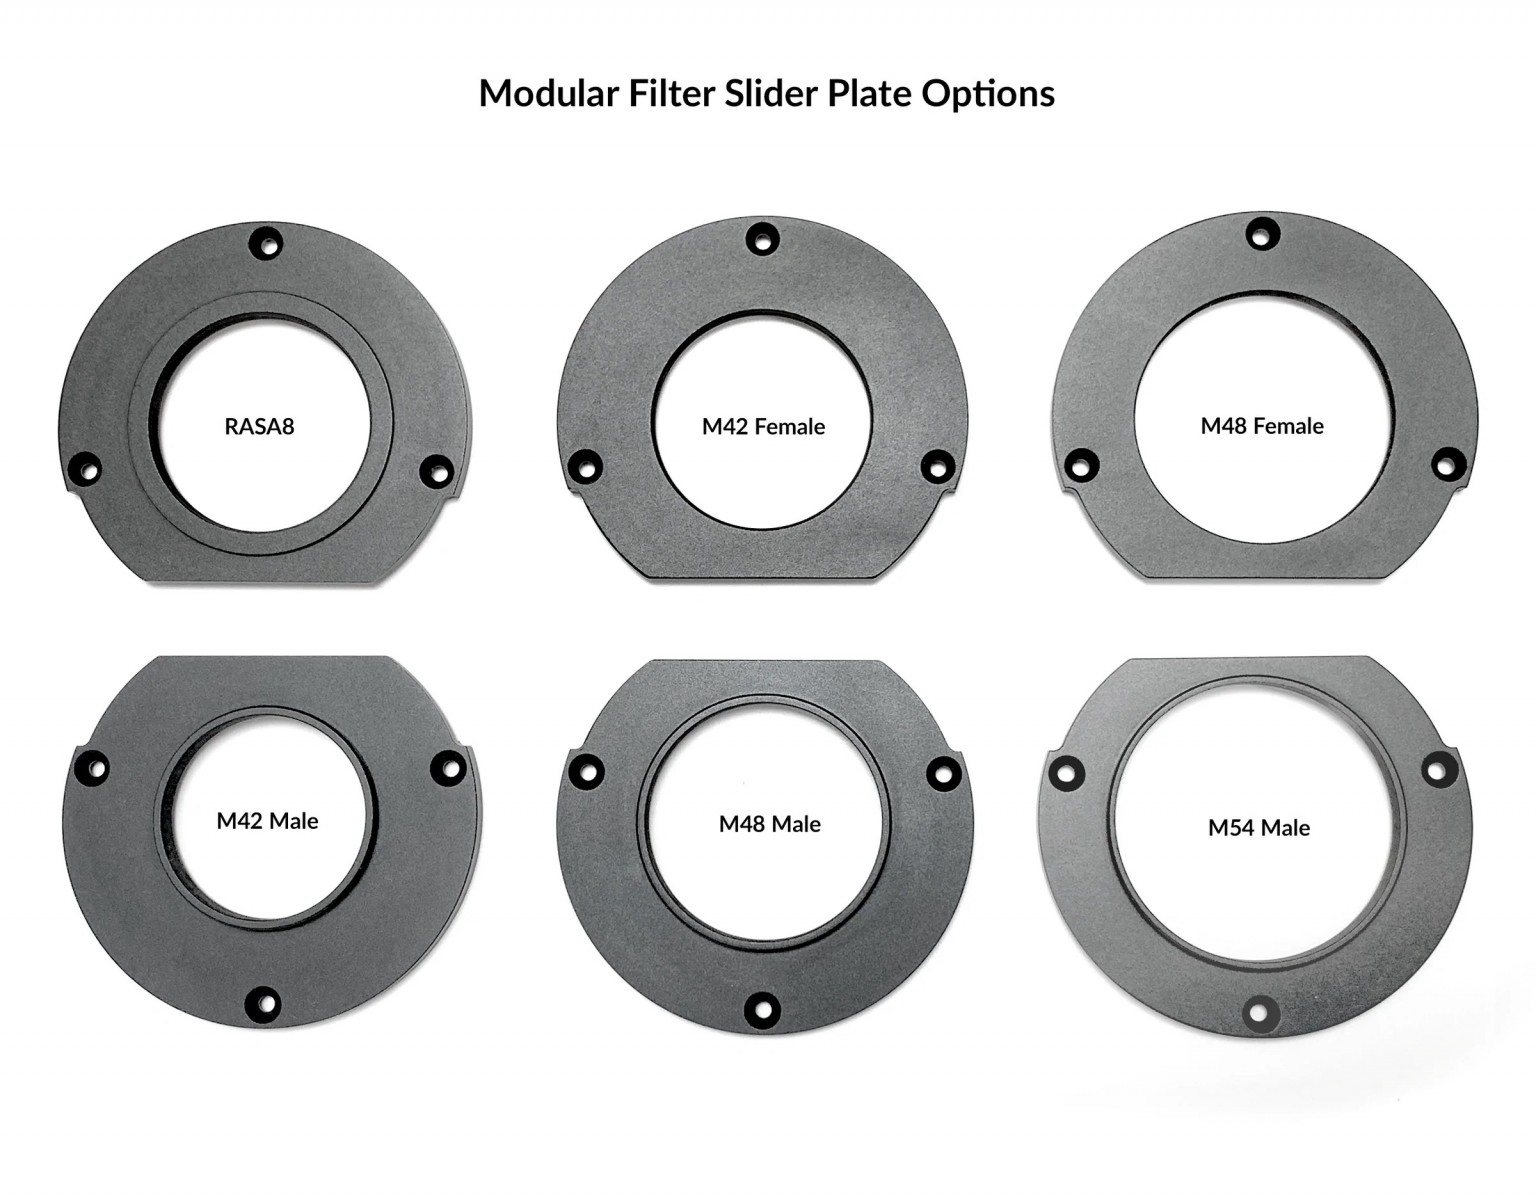 Starizona Modular Filter Slider Plate (M48 Male)